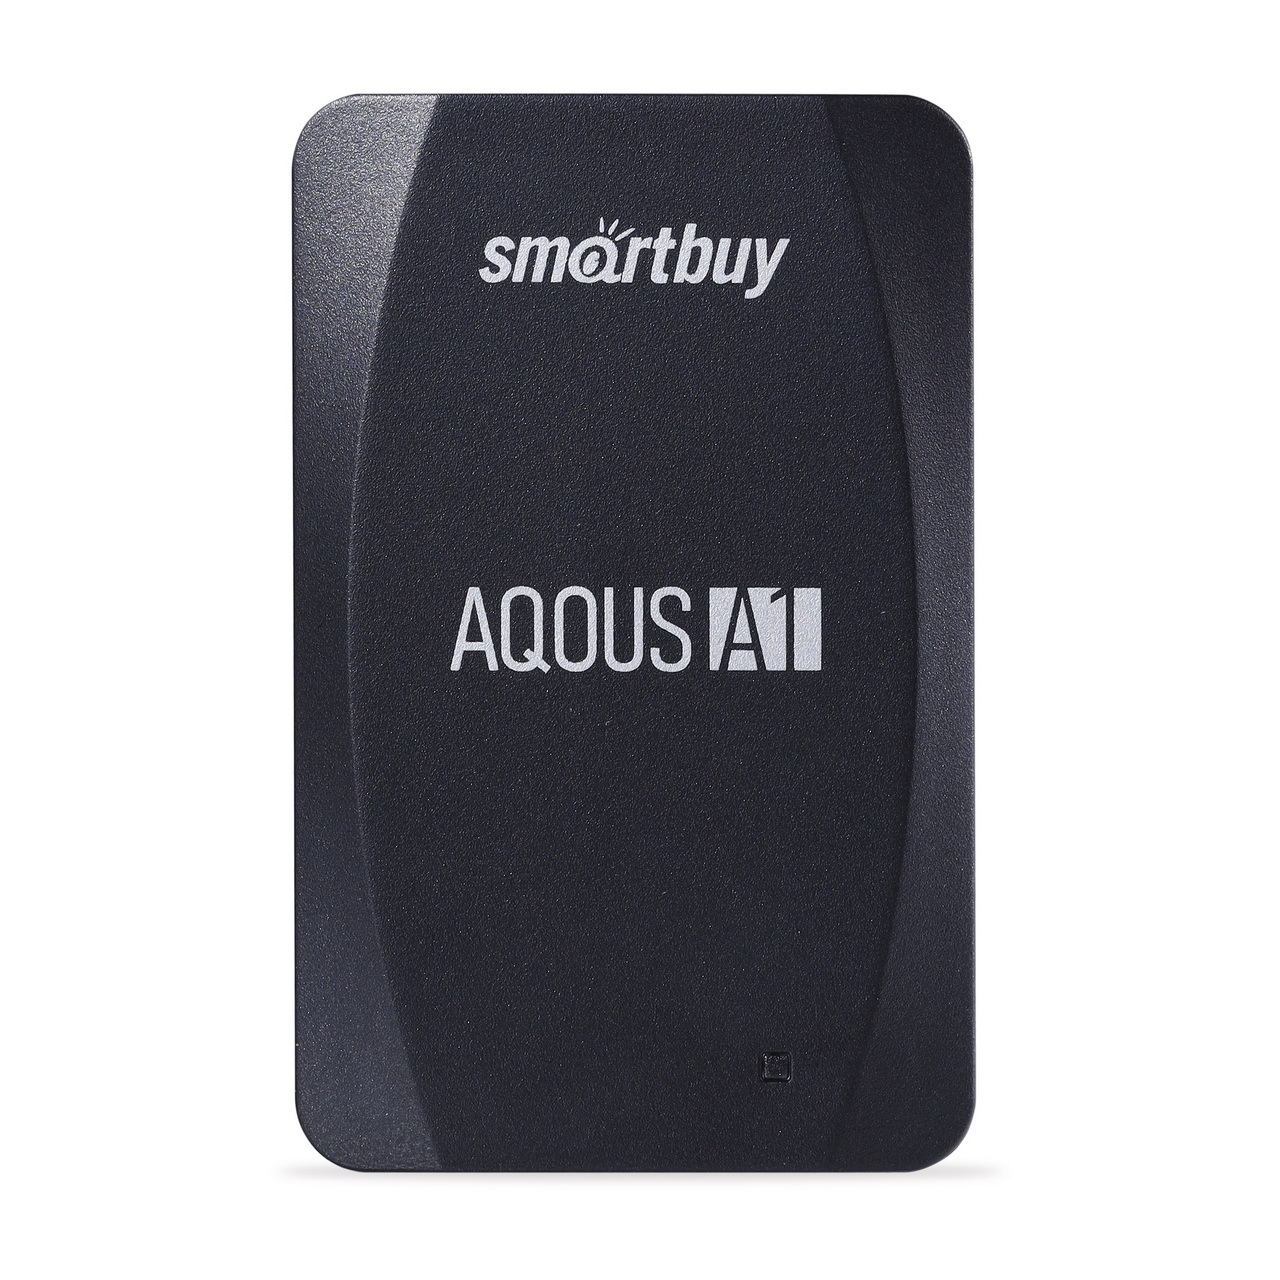 фото Внешний диск ssd smartbuy aqous a1 1tb black (sb001tb-a1b-u31c)